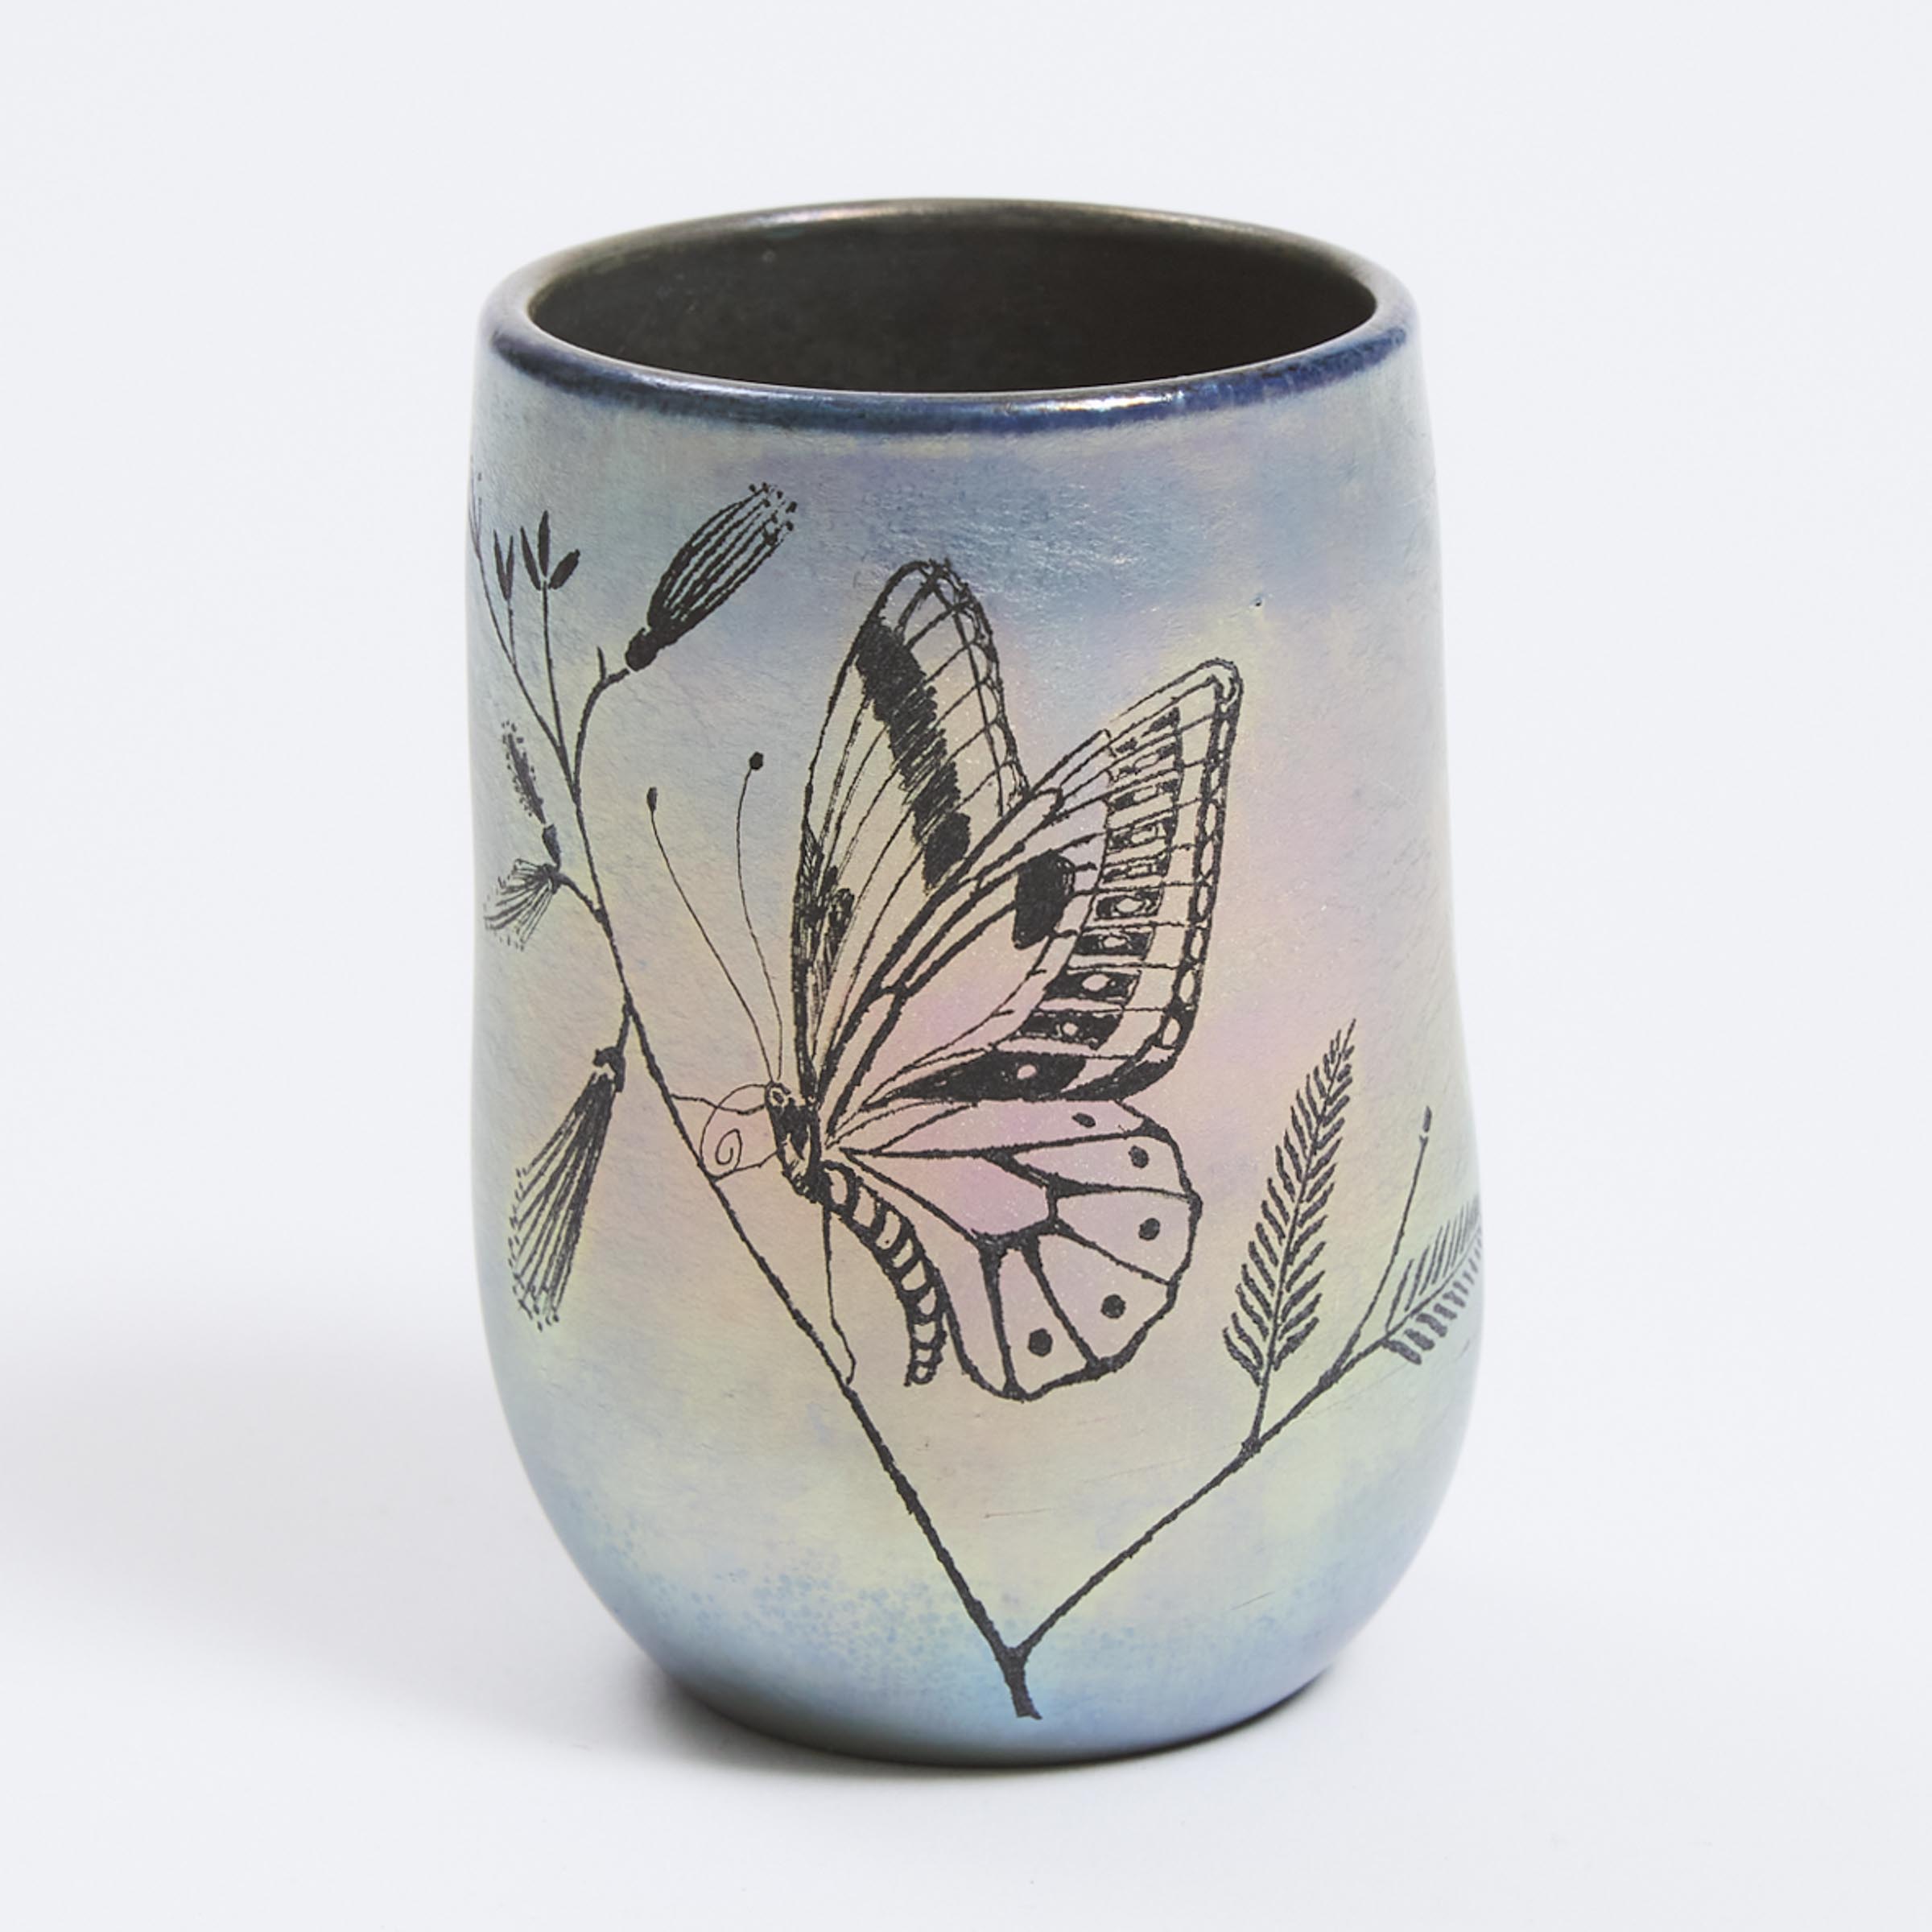 Charles Lotton (American, 1935-2021), Miniature Iridescent Glass Vase engraved by Max Erlacher (Austrian, b.1933), 2005